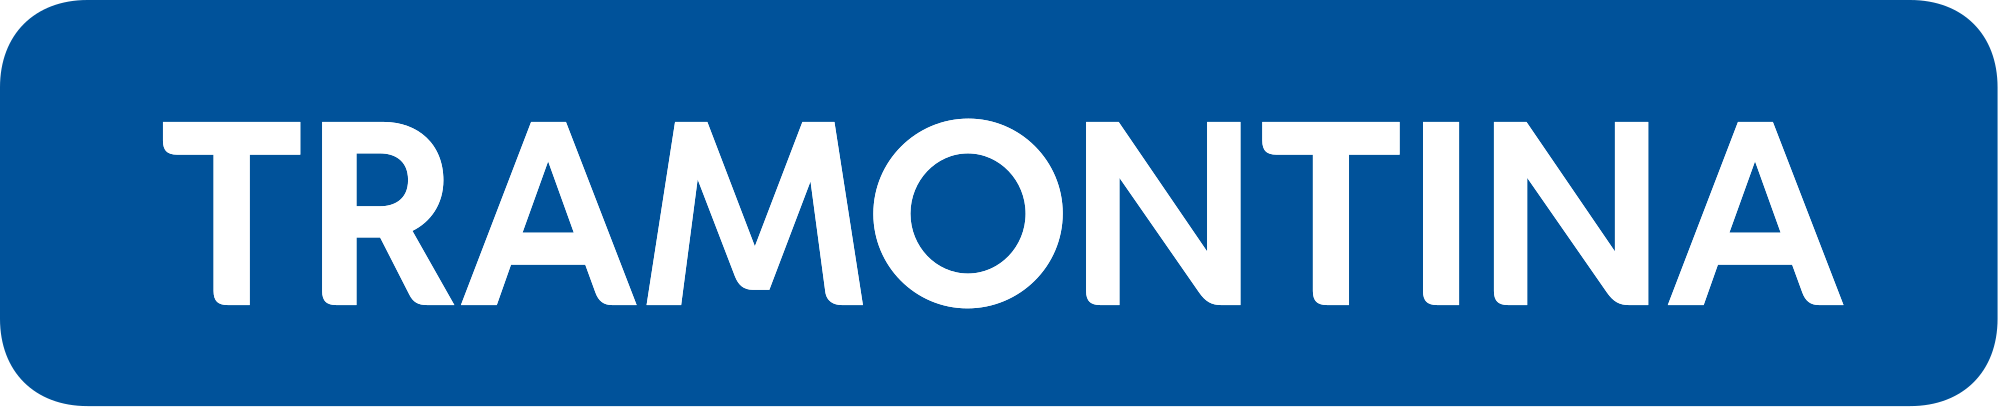 Tramontina_Logo.svg